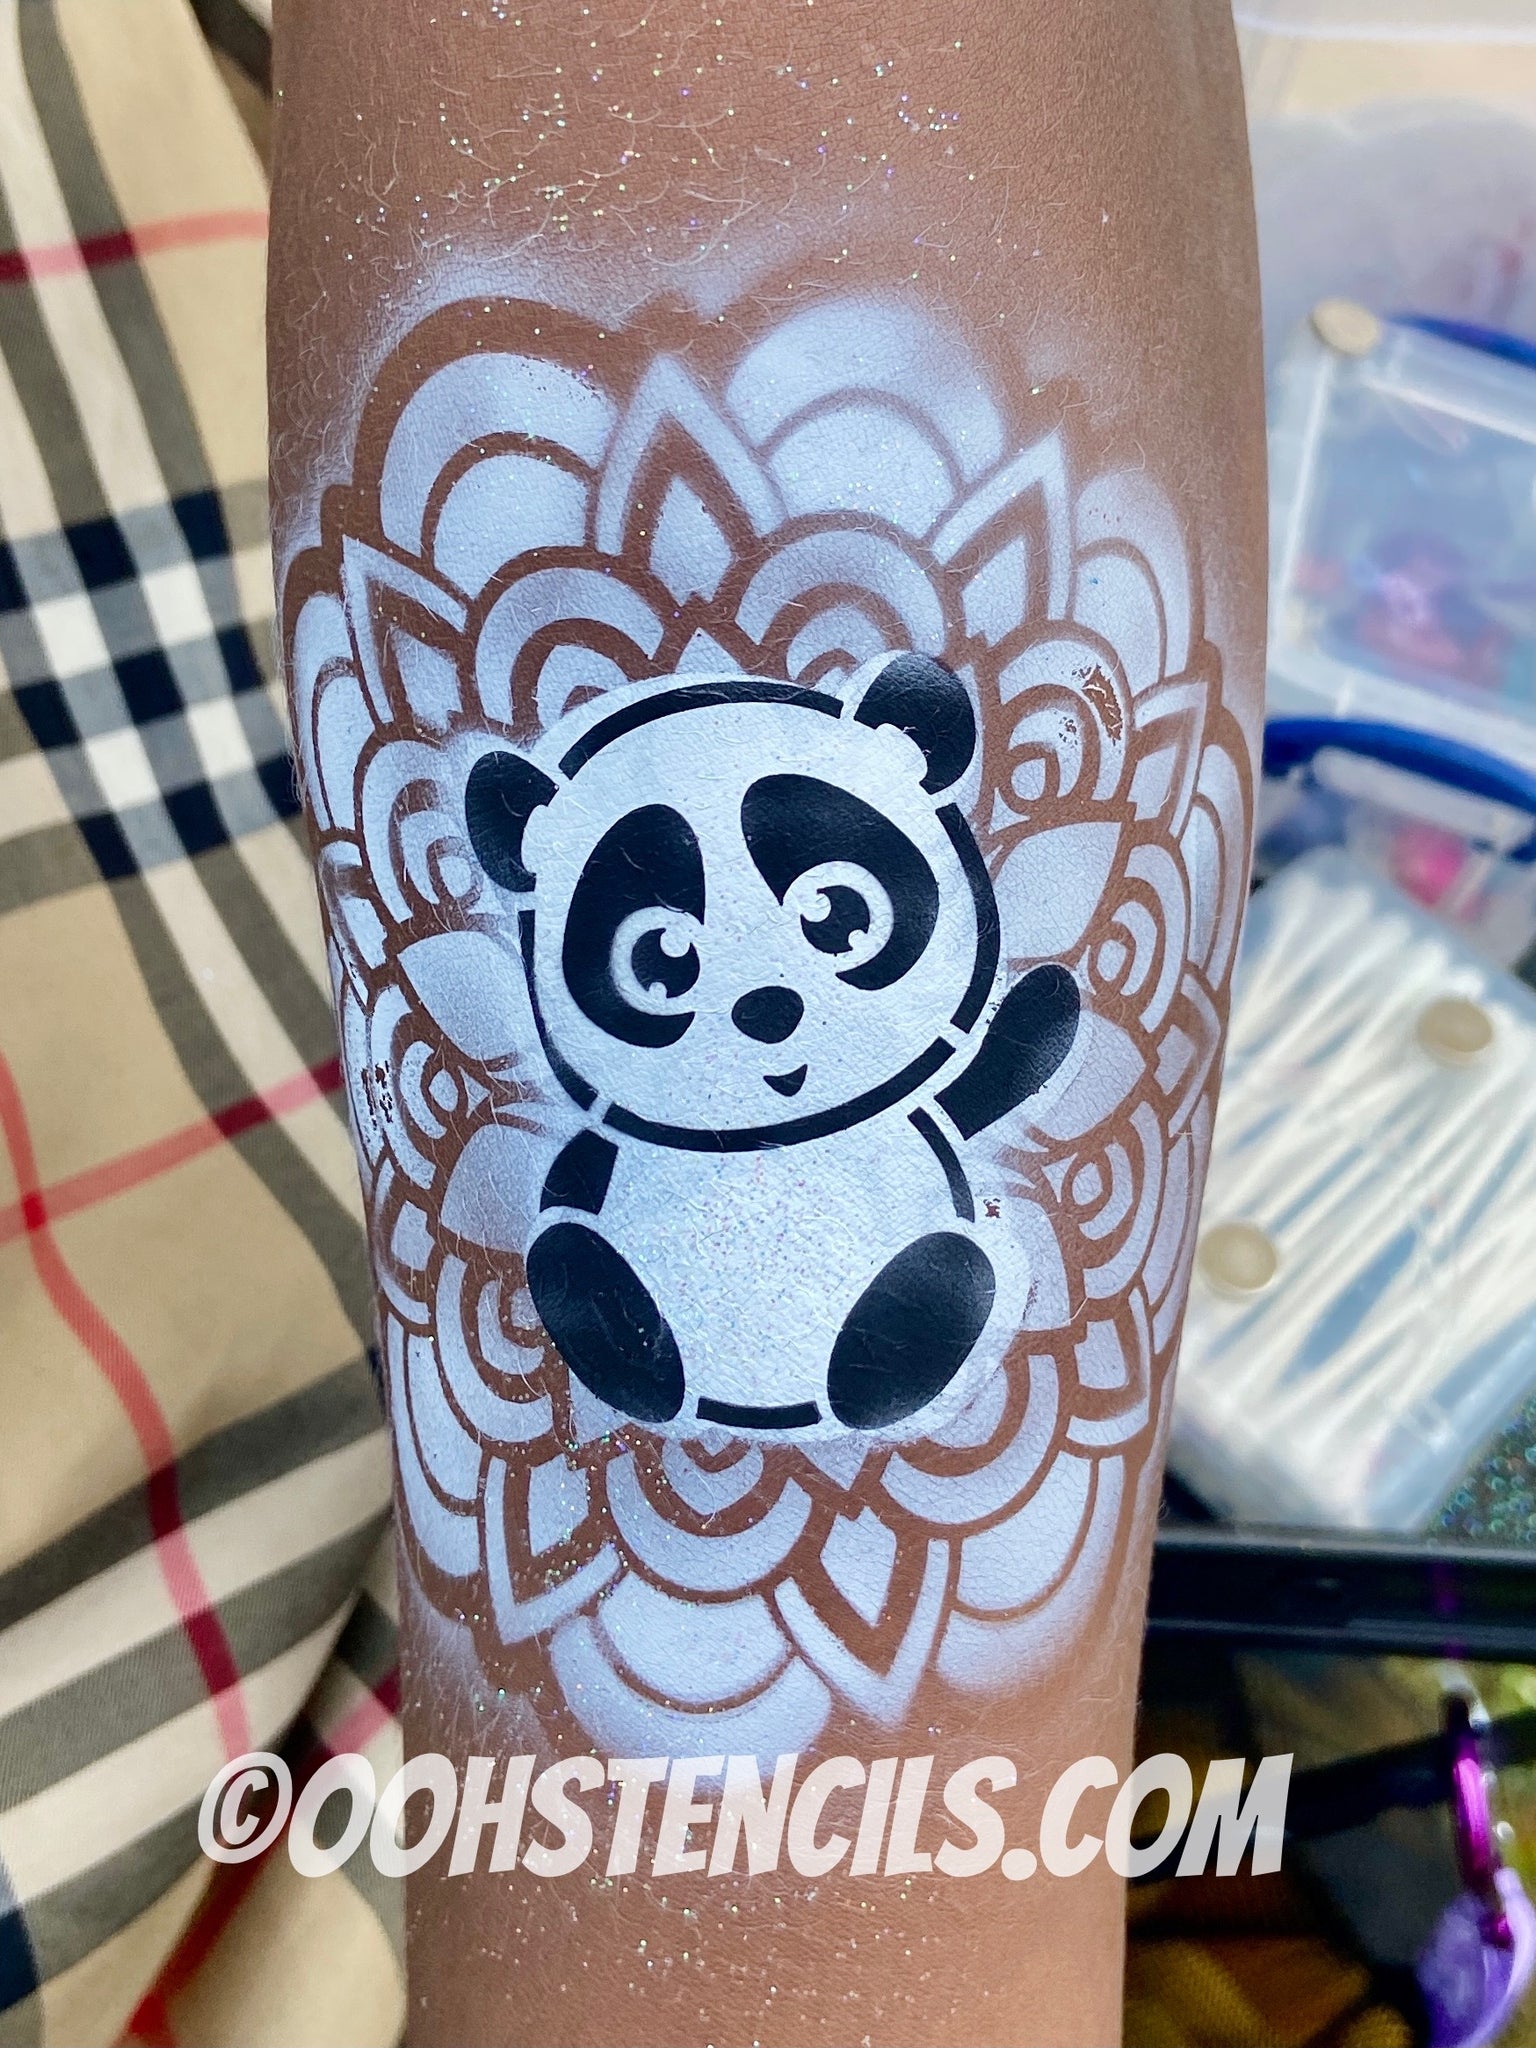 S08 Jewel Mandala Sphere Airbrush & Face Paint Stencil – Ooh! Body Art  Stencils